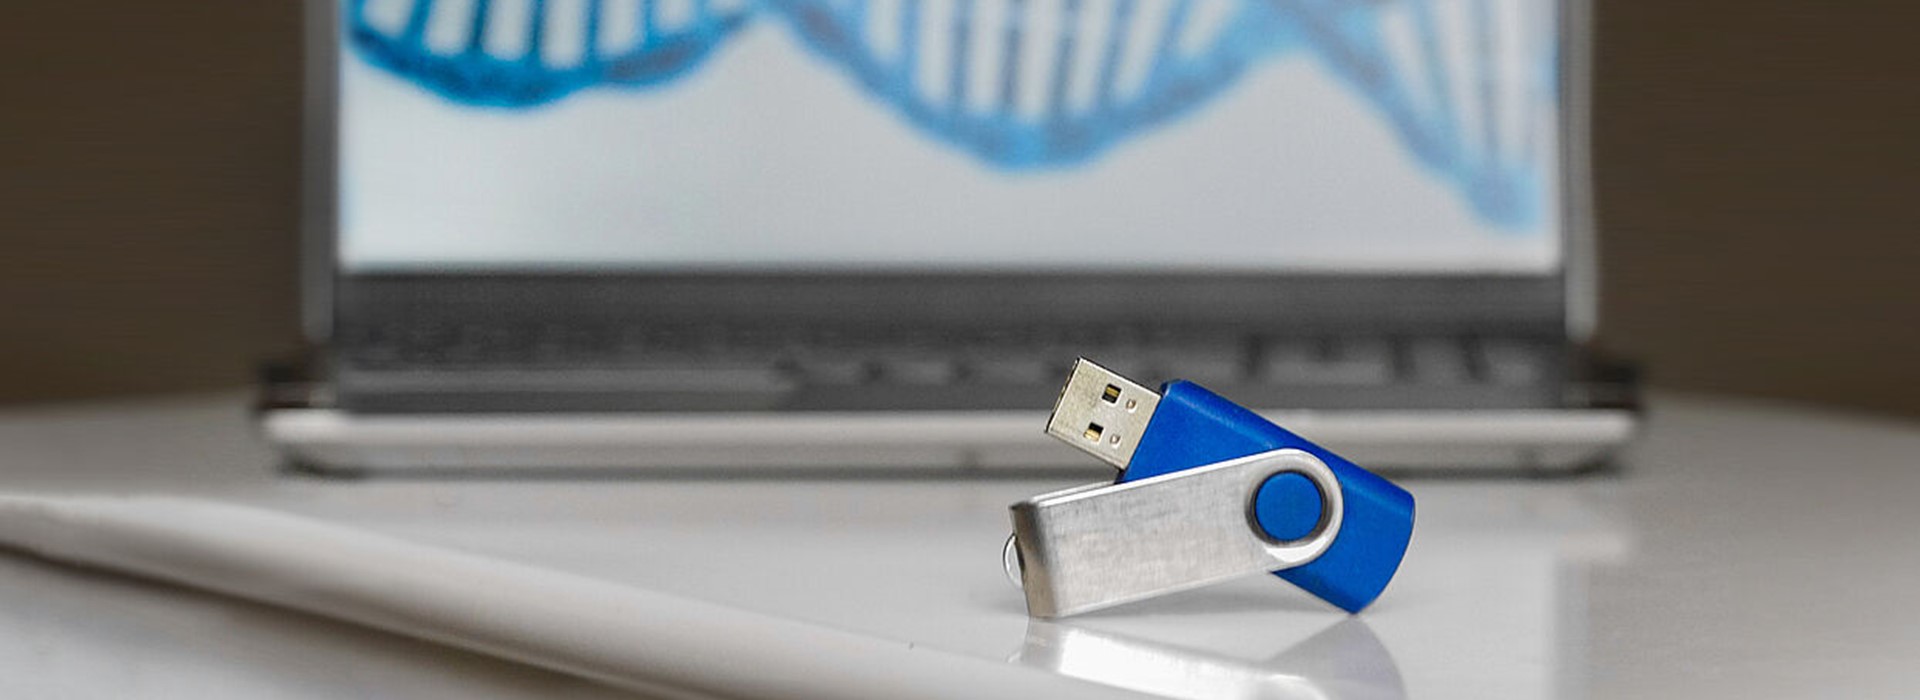 Sustainable data storage via DNA